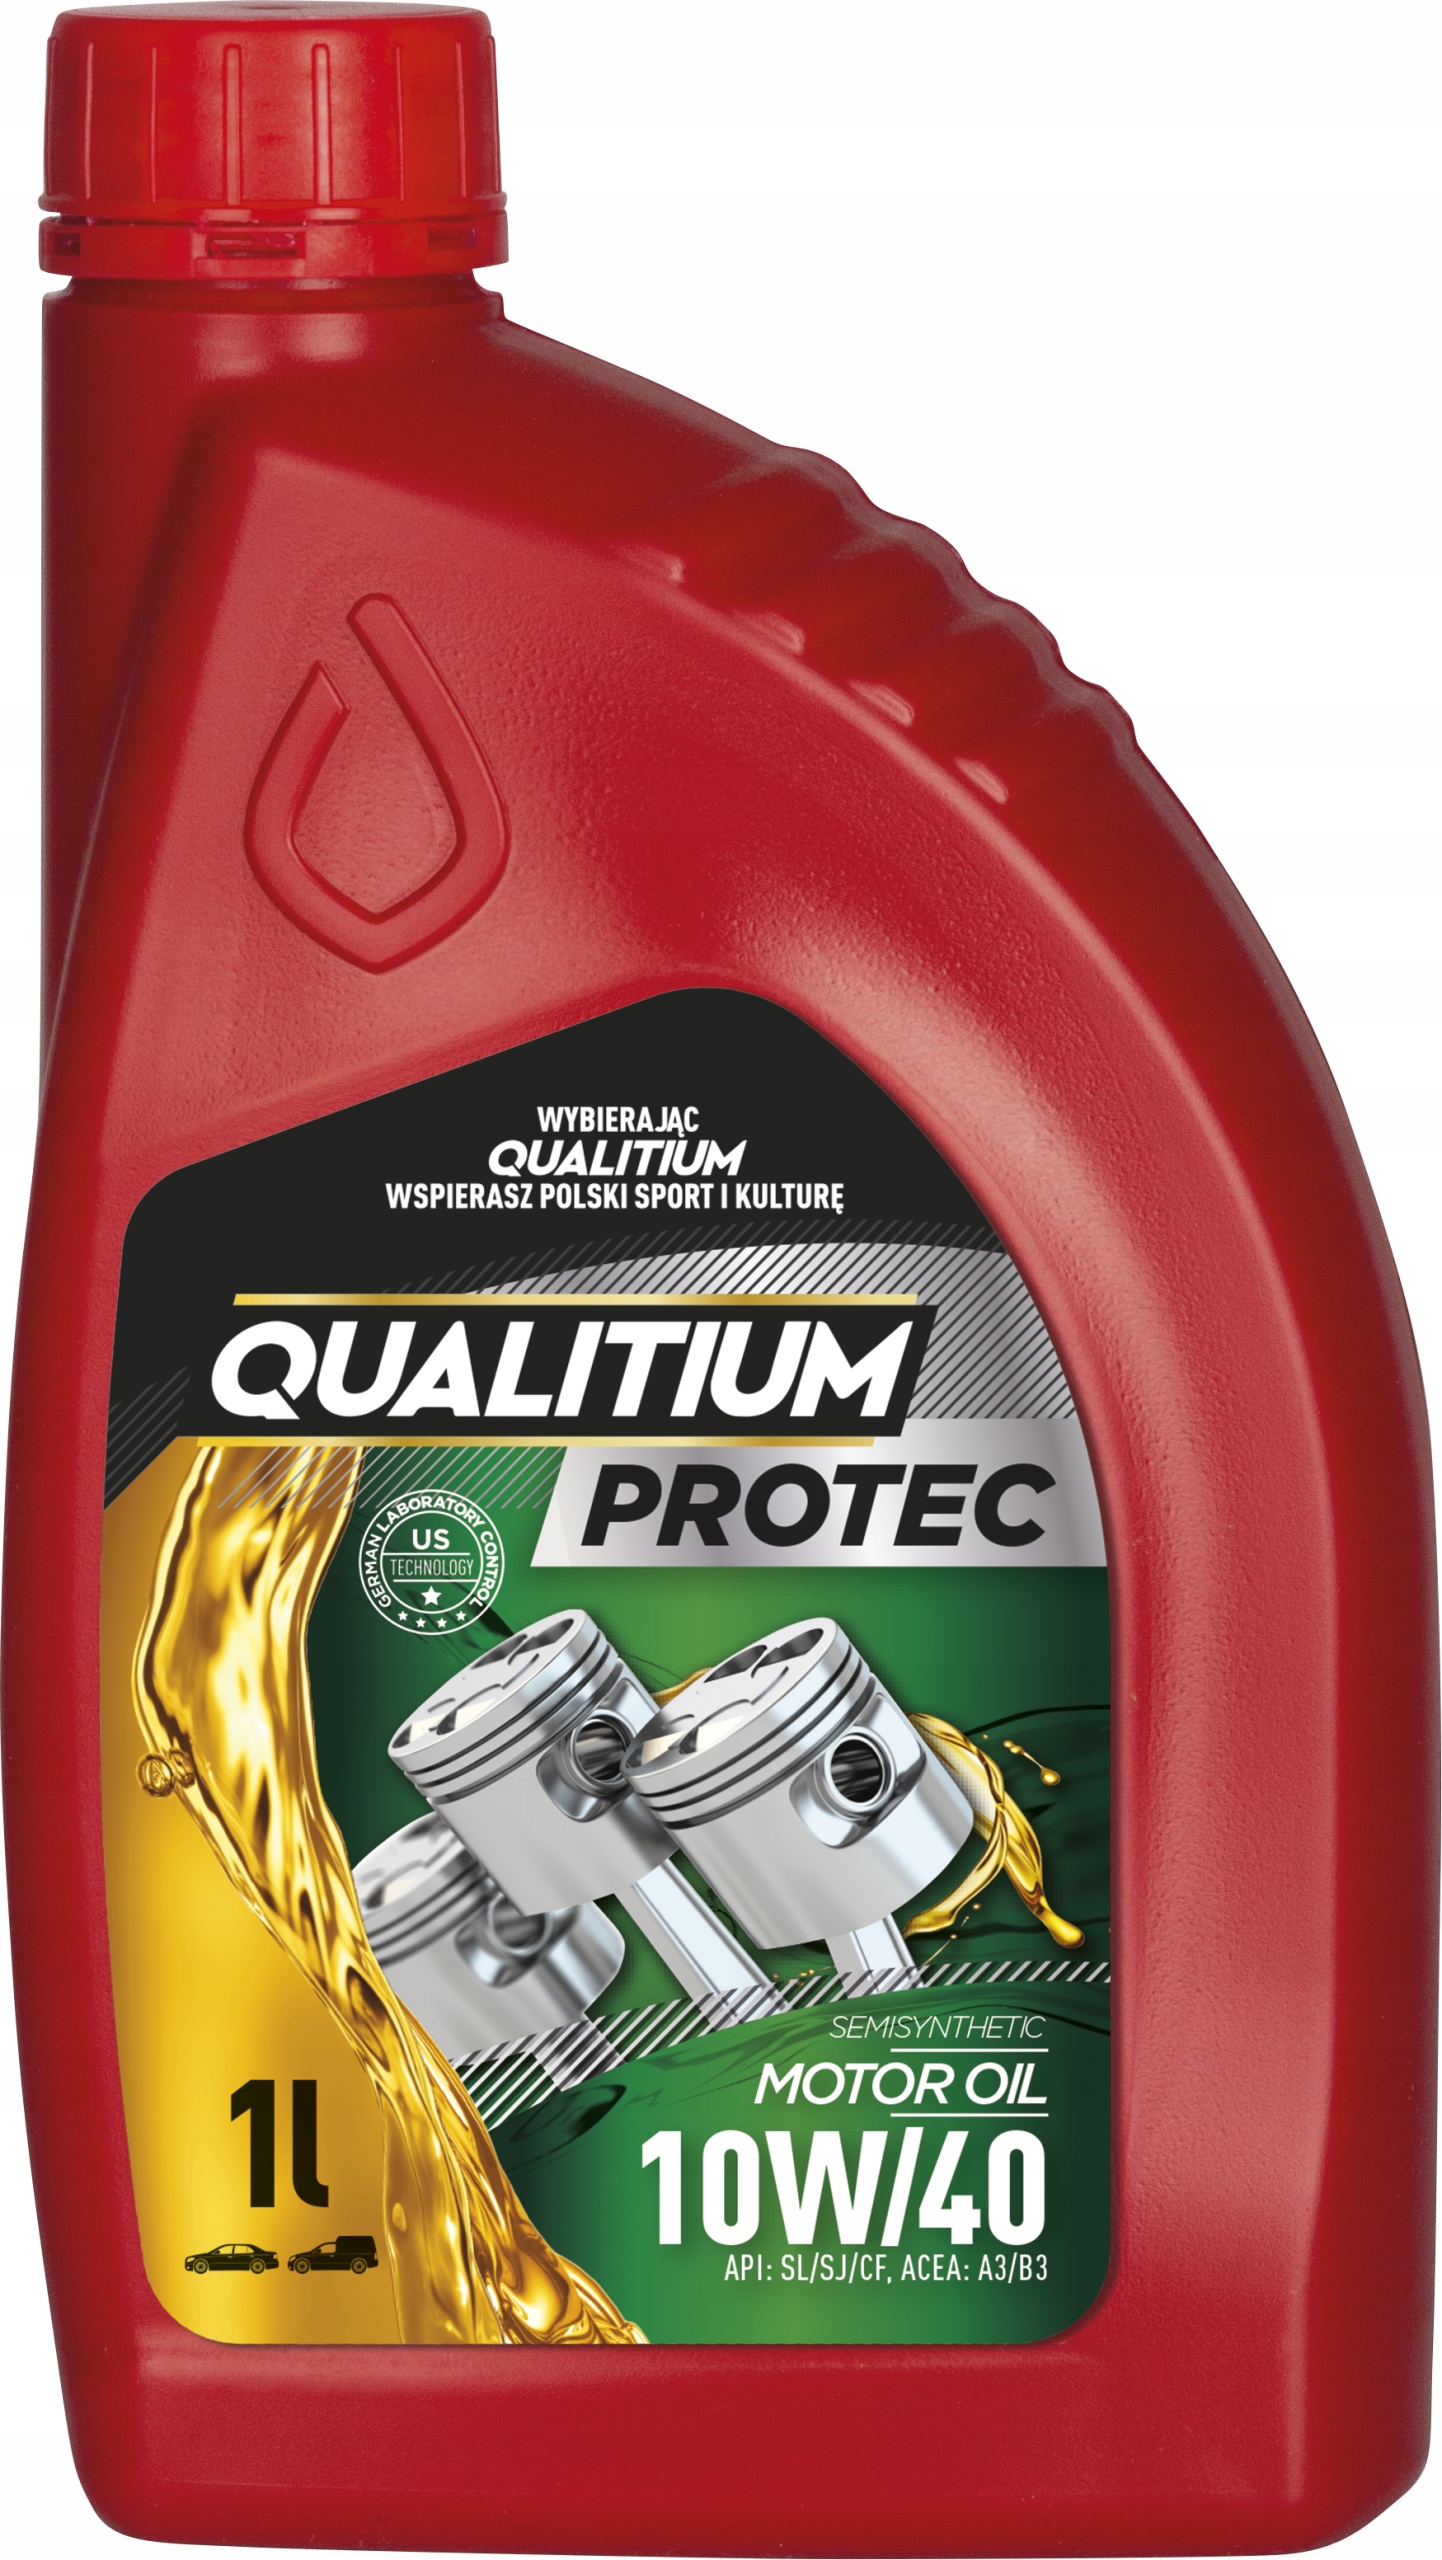 Qualitium Protec 10W40 1L полусинтетическое масло